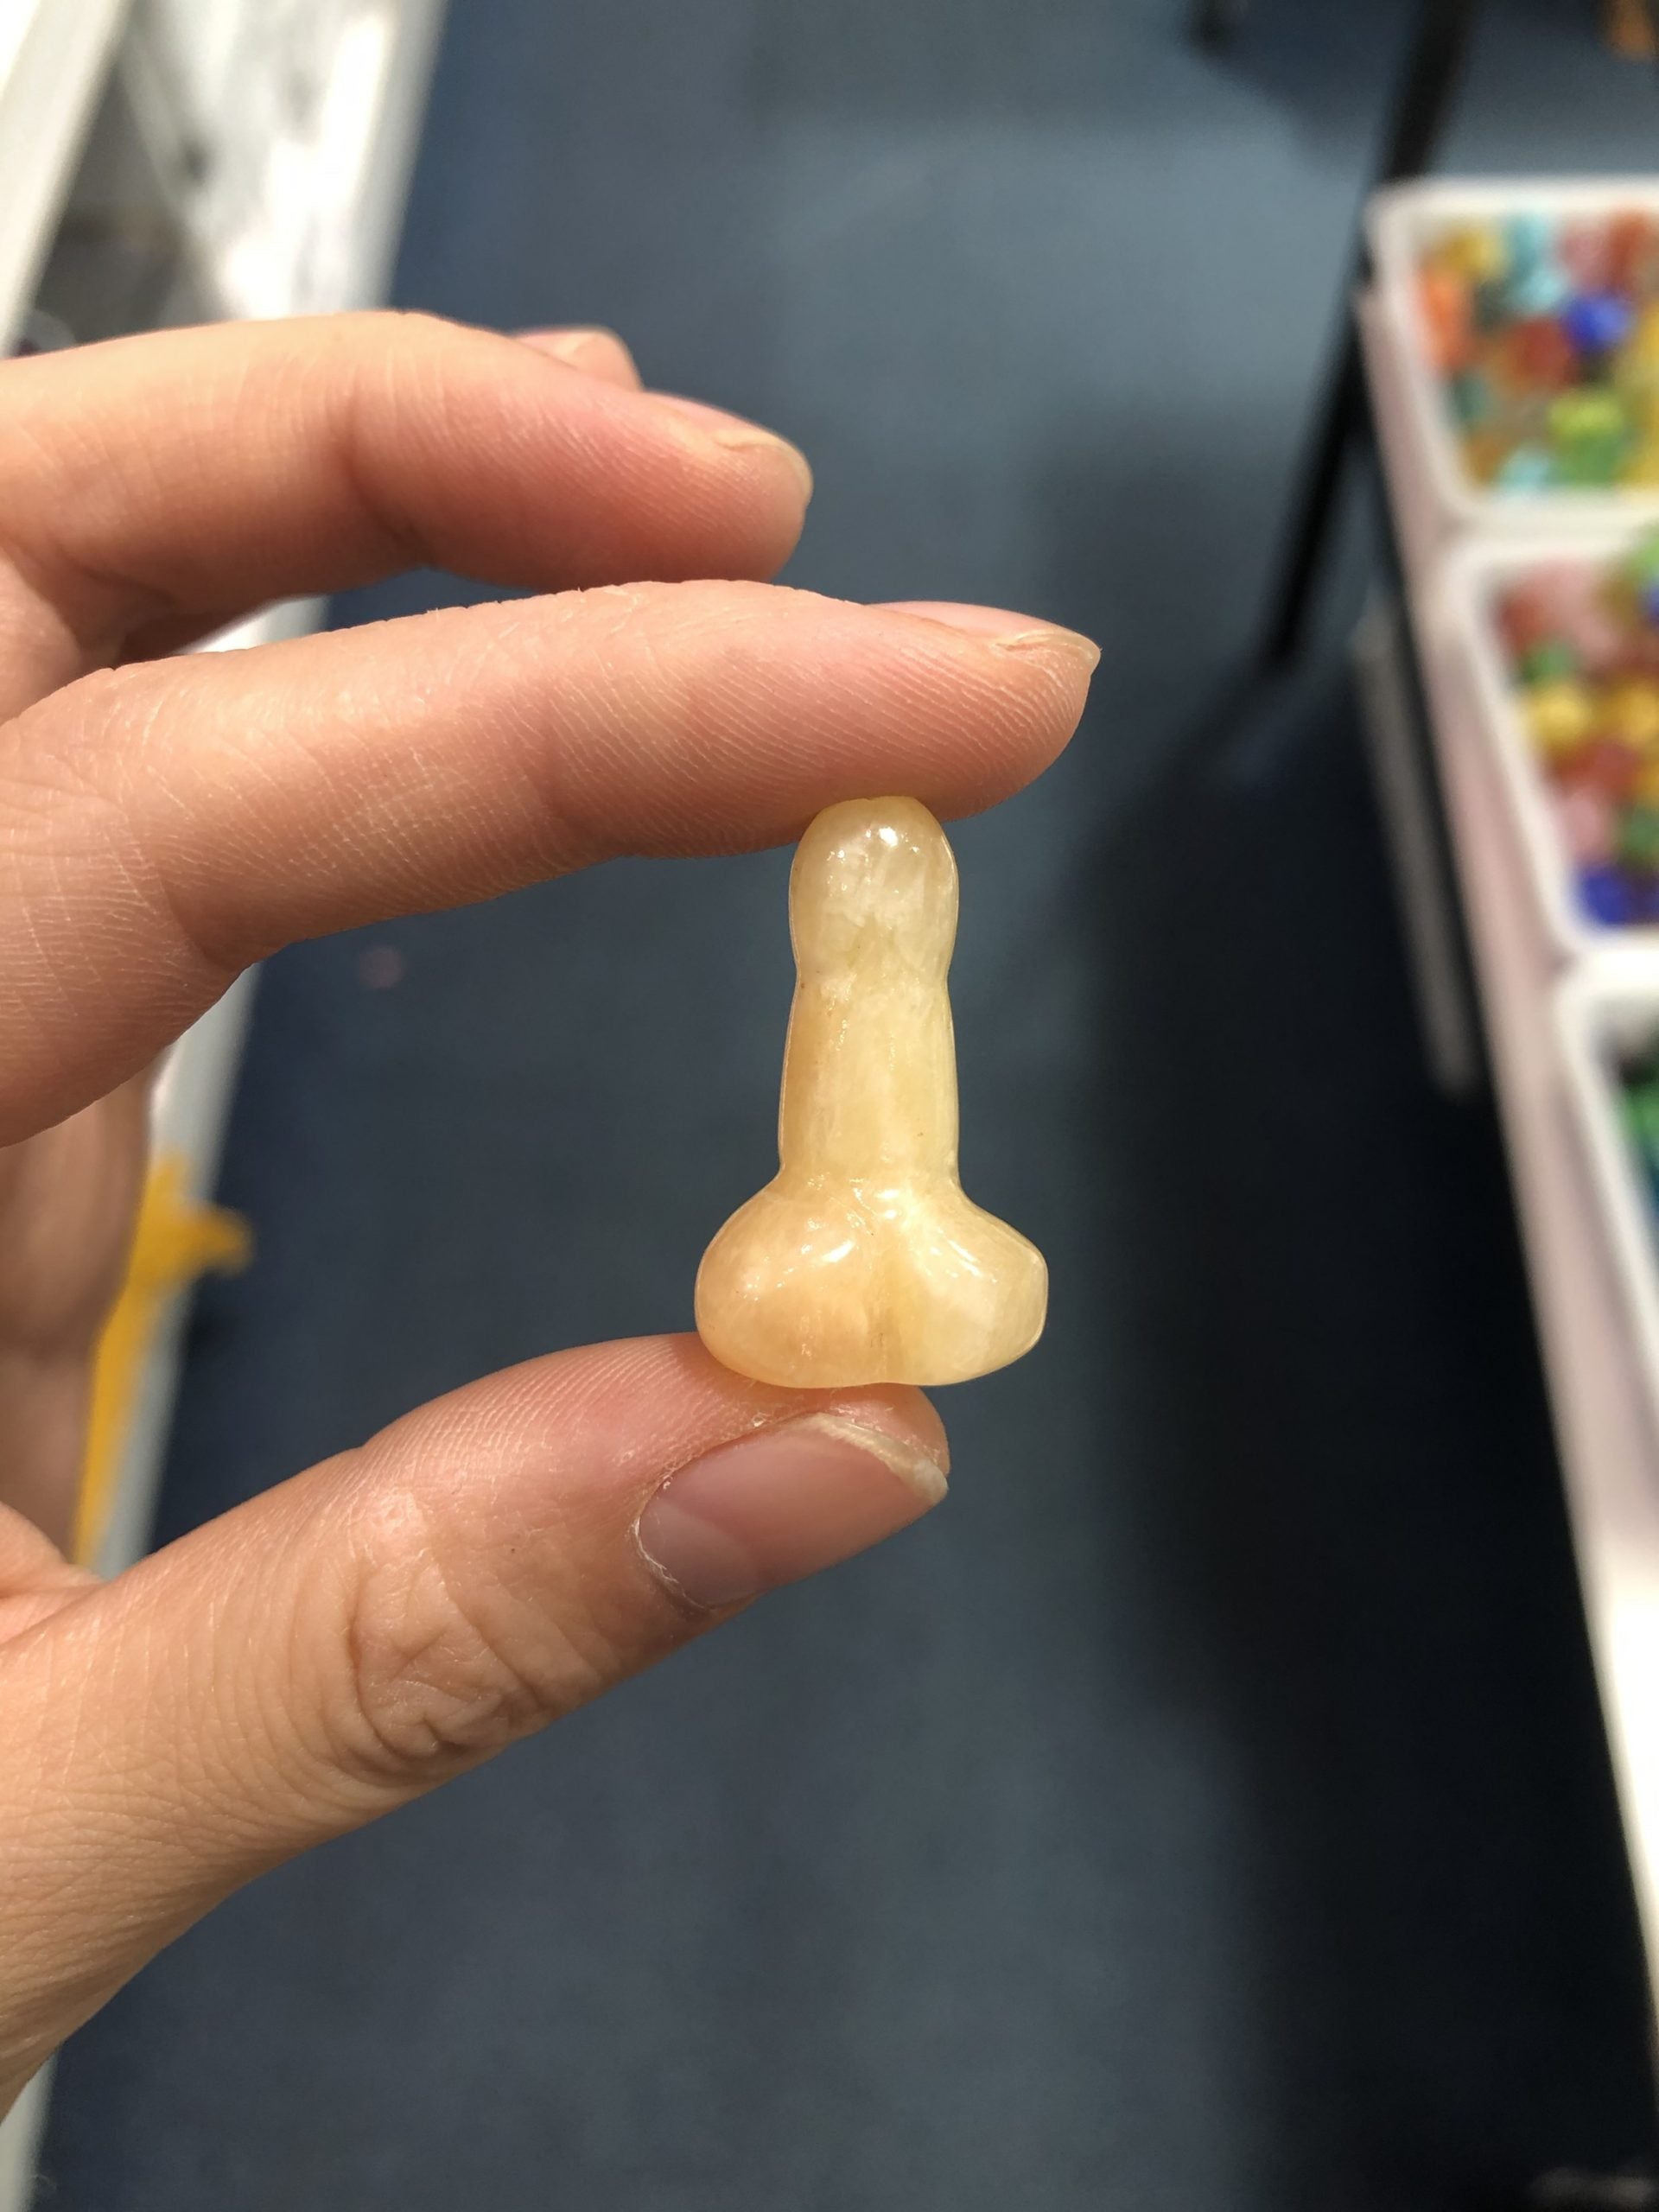 Mini Penis/dingding